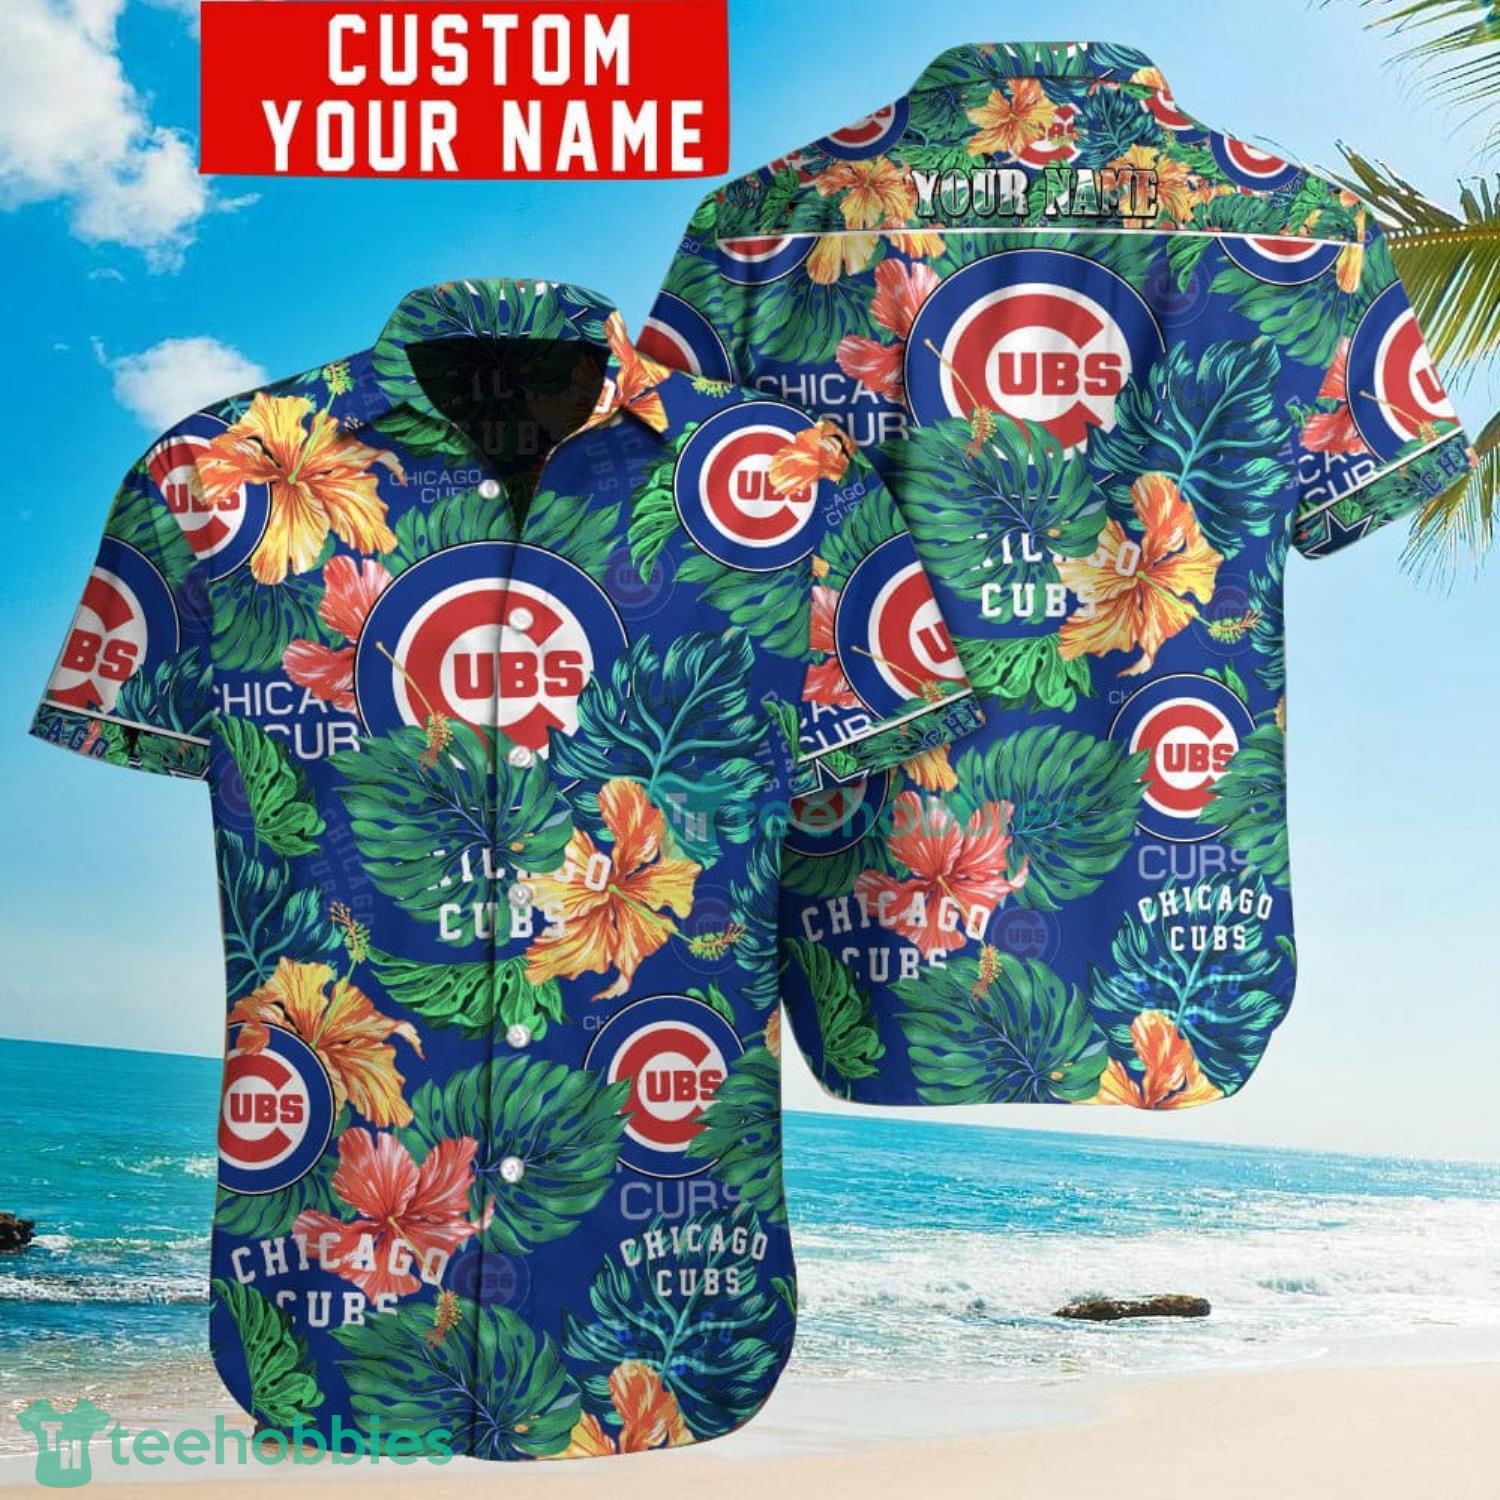 Seattle Mariners MLB Personalized Palm Tree Hawaiian Shirt - Growkoc